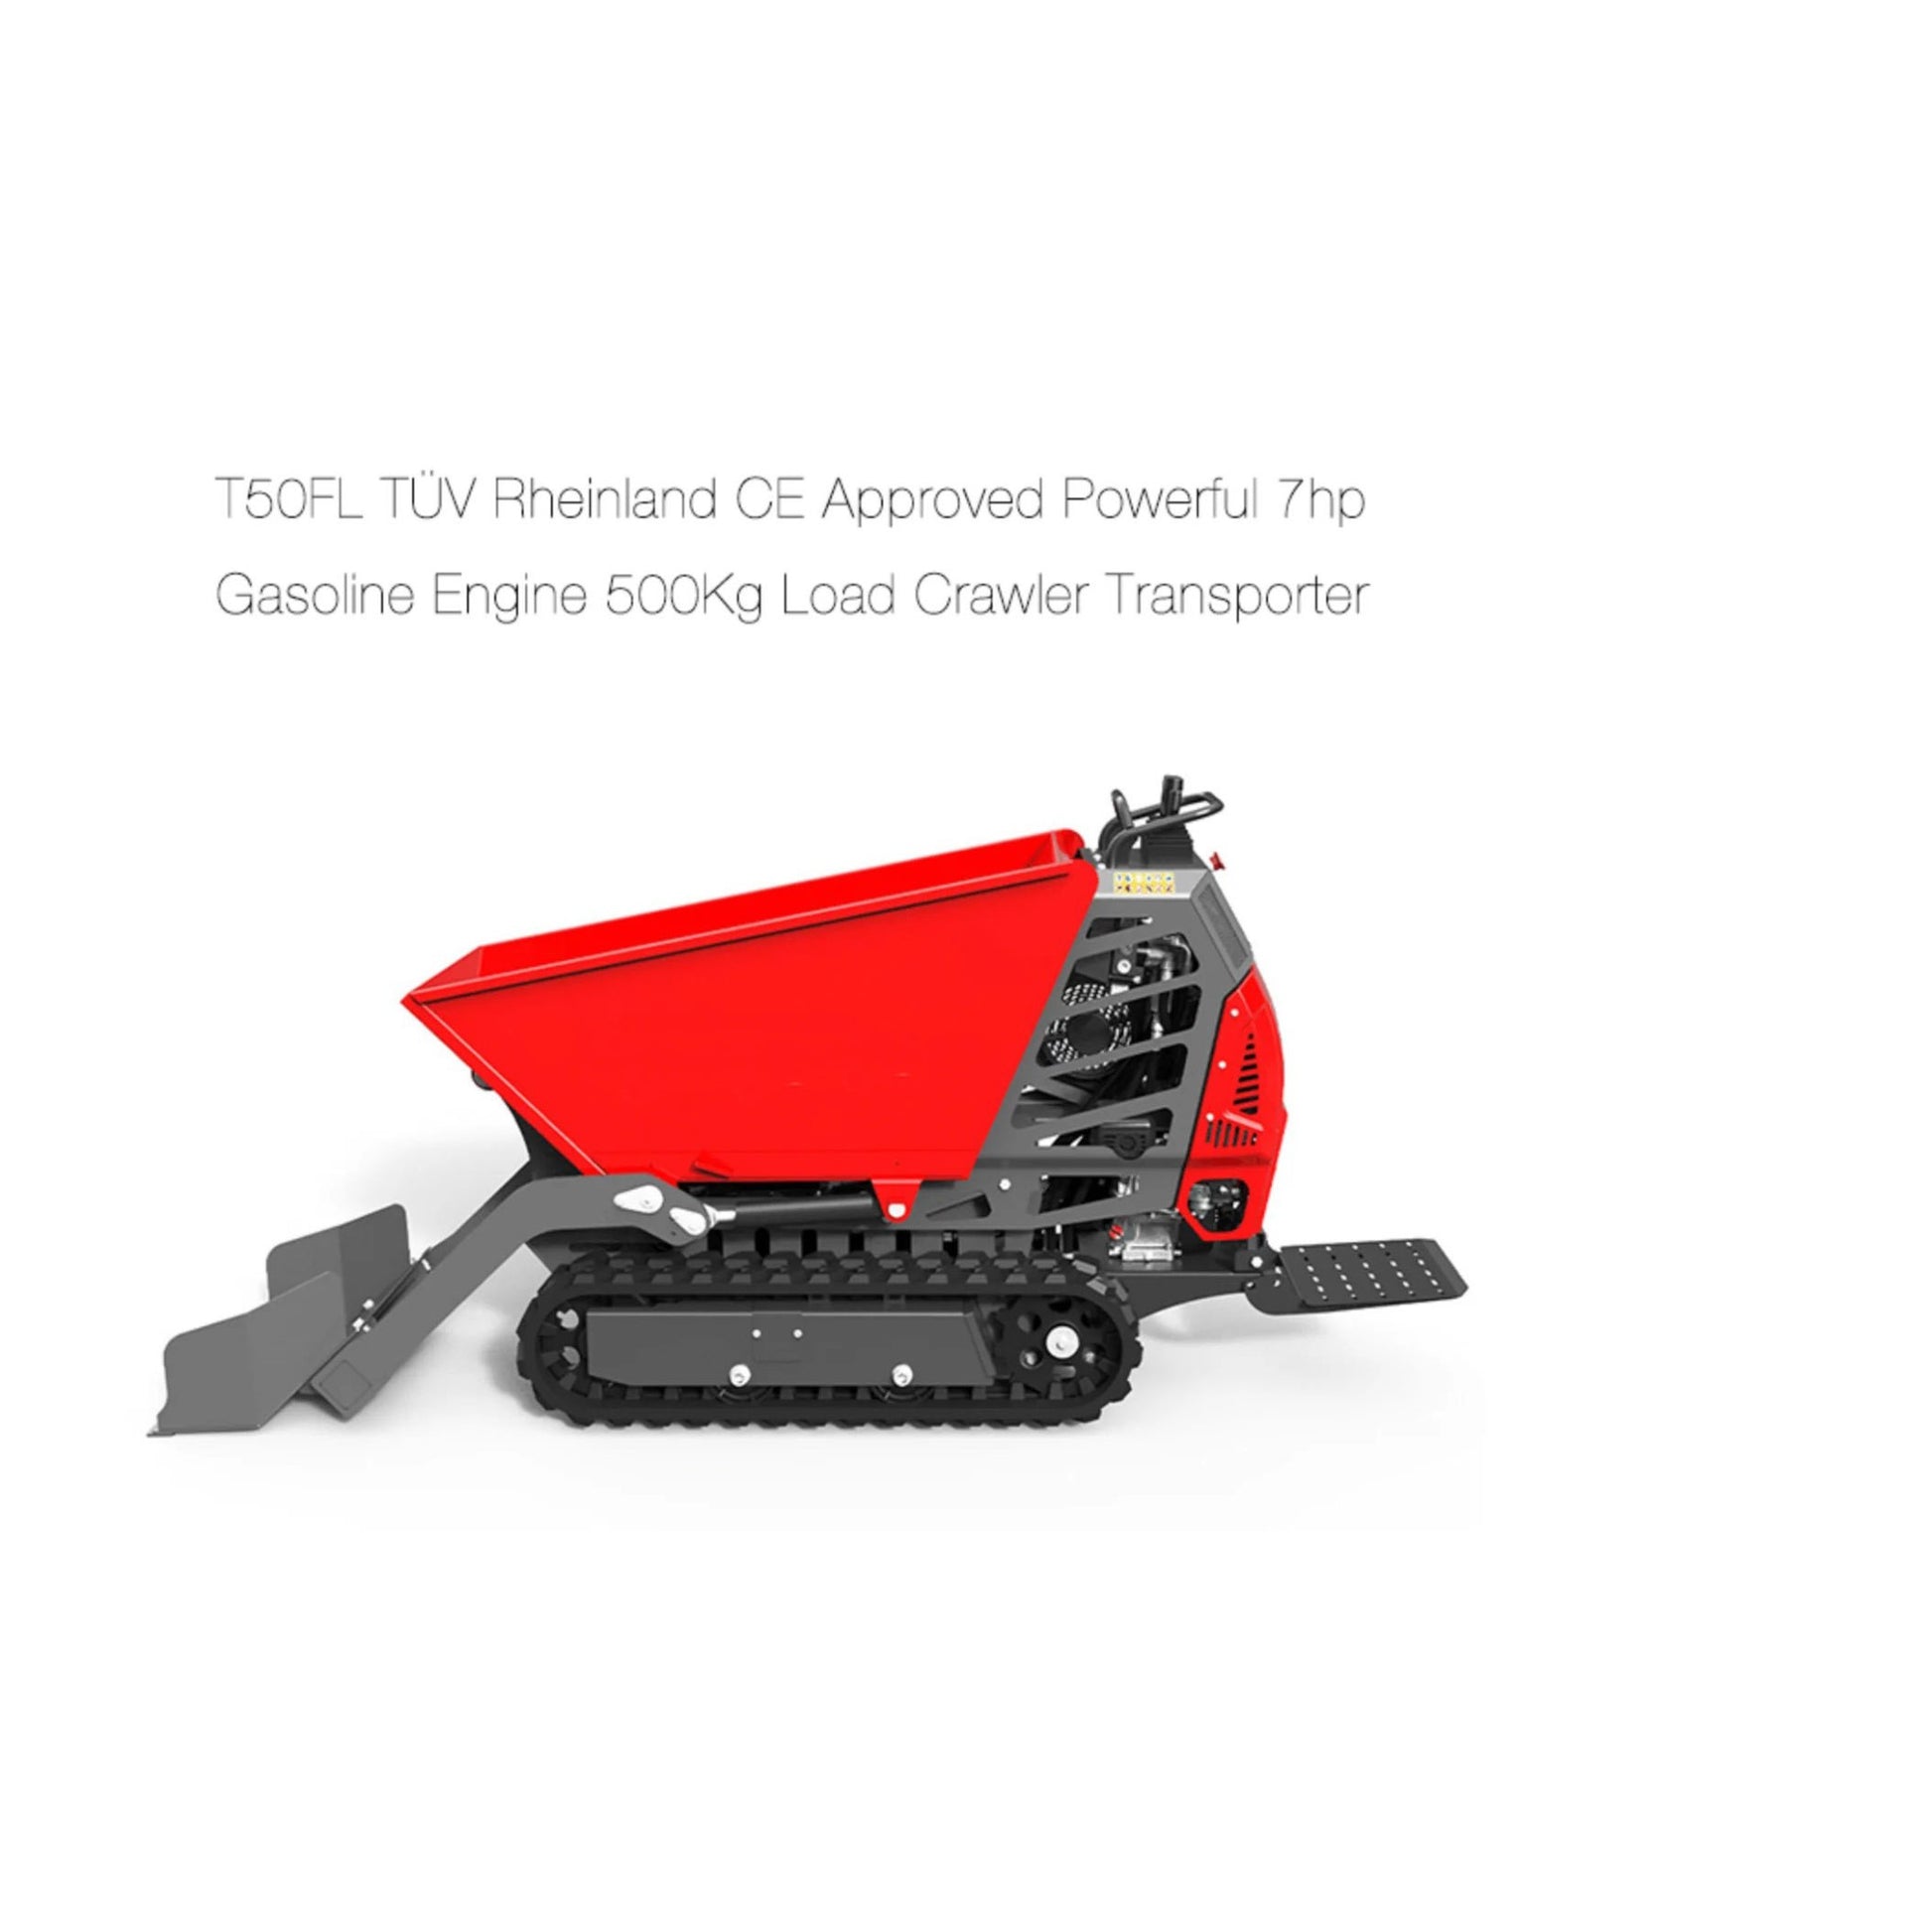 Cargador con volquete de cadenas HOCT50FL Vanguard, capacidad de carga de 500 kg (1102 lb)